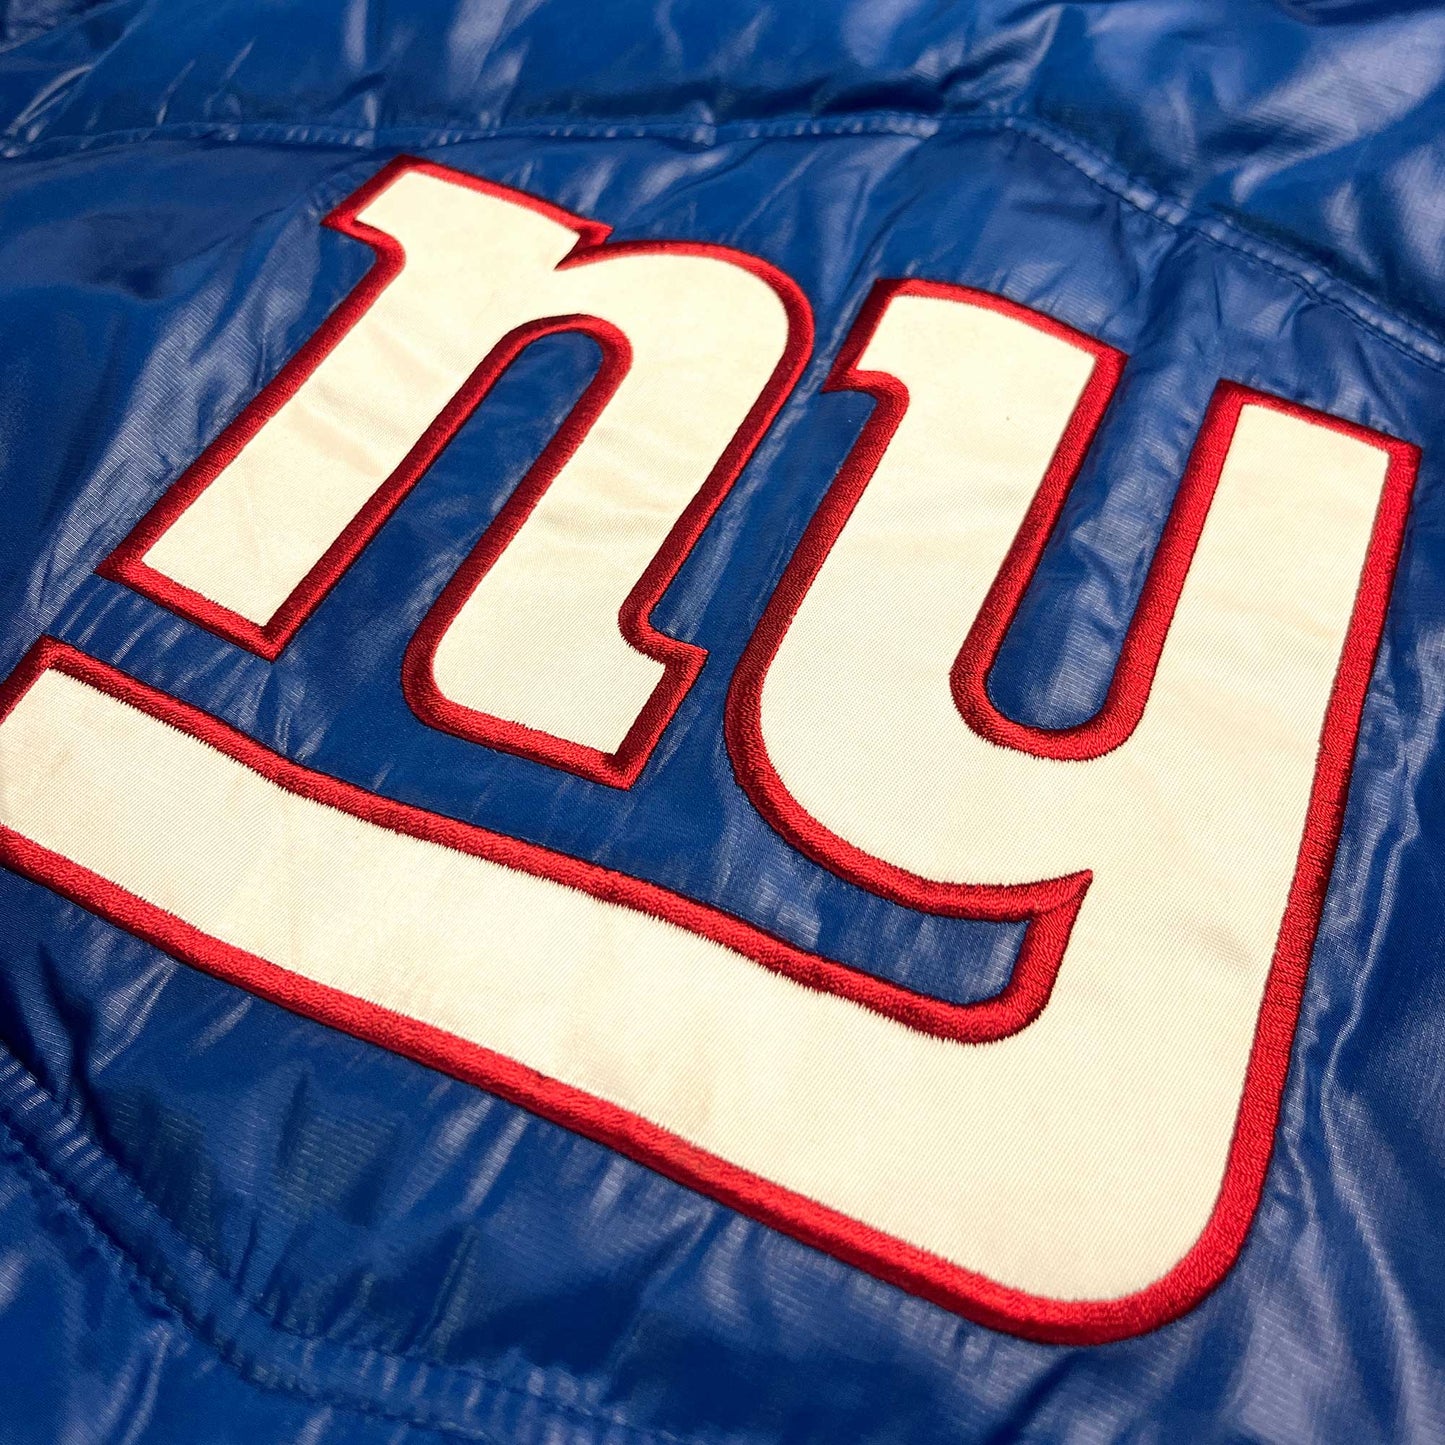 New York Giants - gefütterte NFL Jacke - Größe M - Reebok